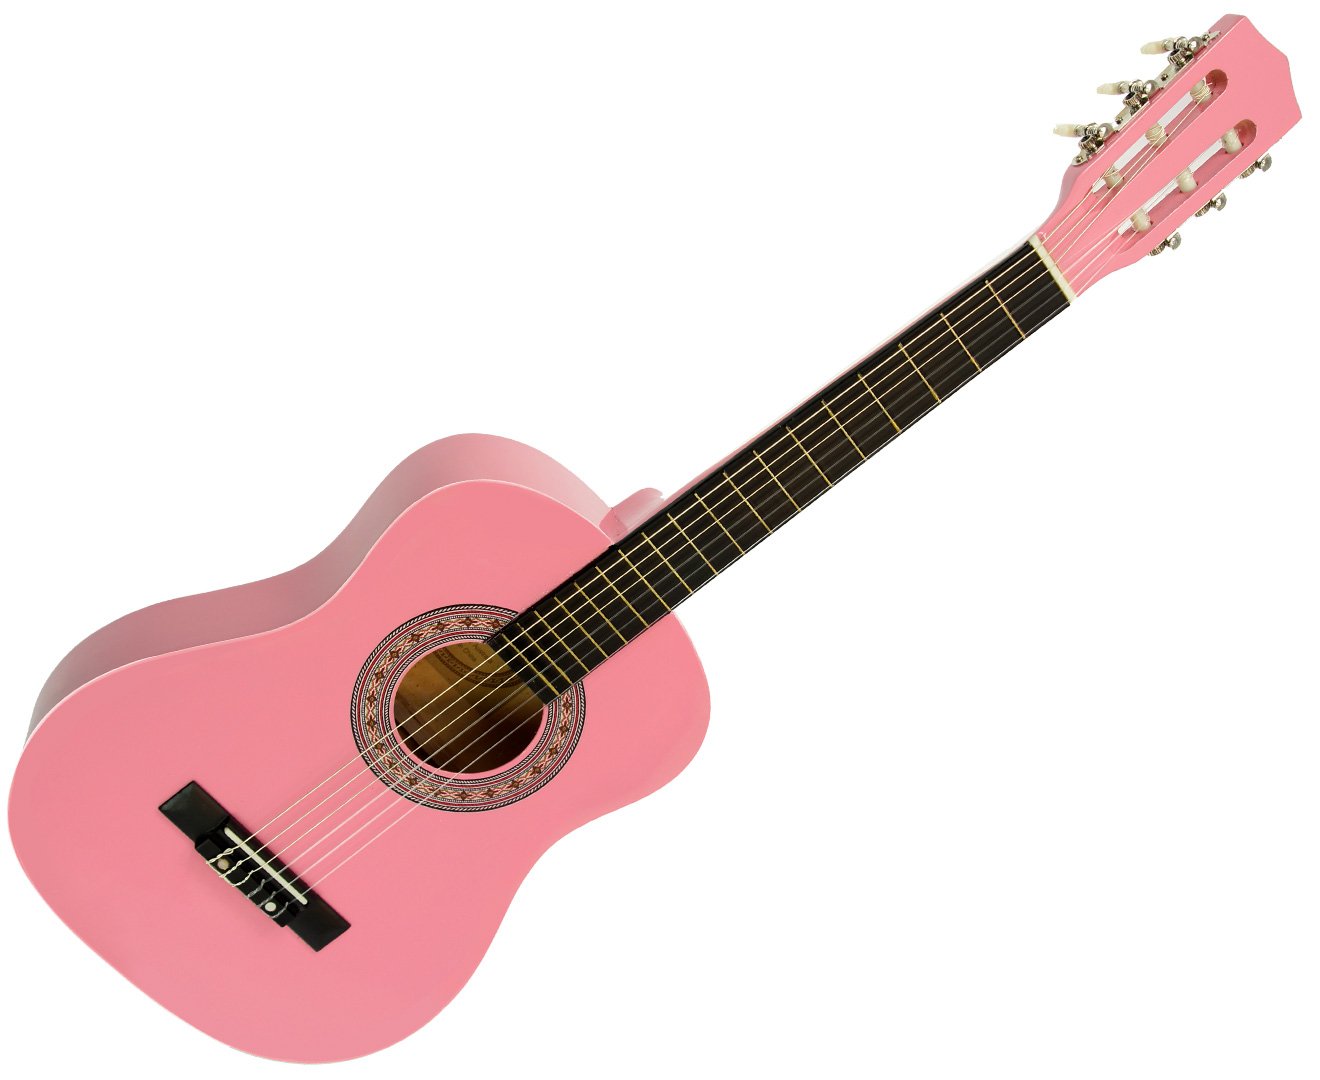 Childrens Guitar Karrera 34in Acoustic Wooden - Pink 2